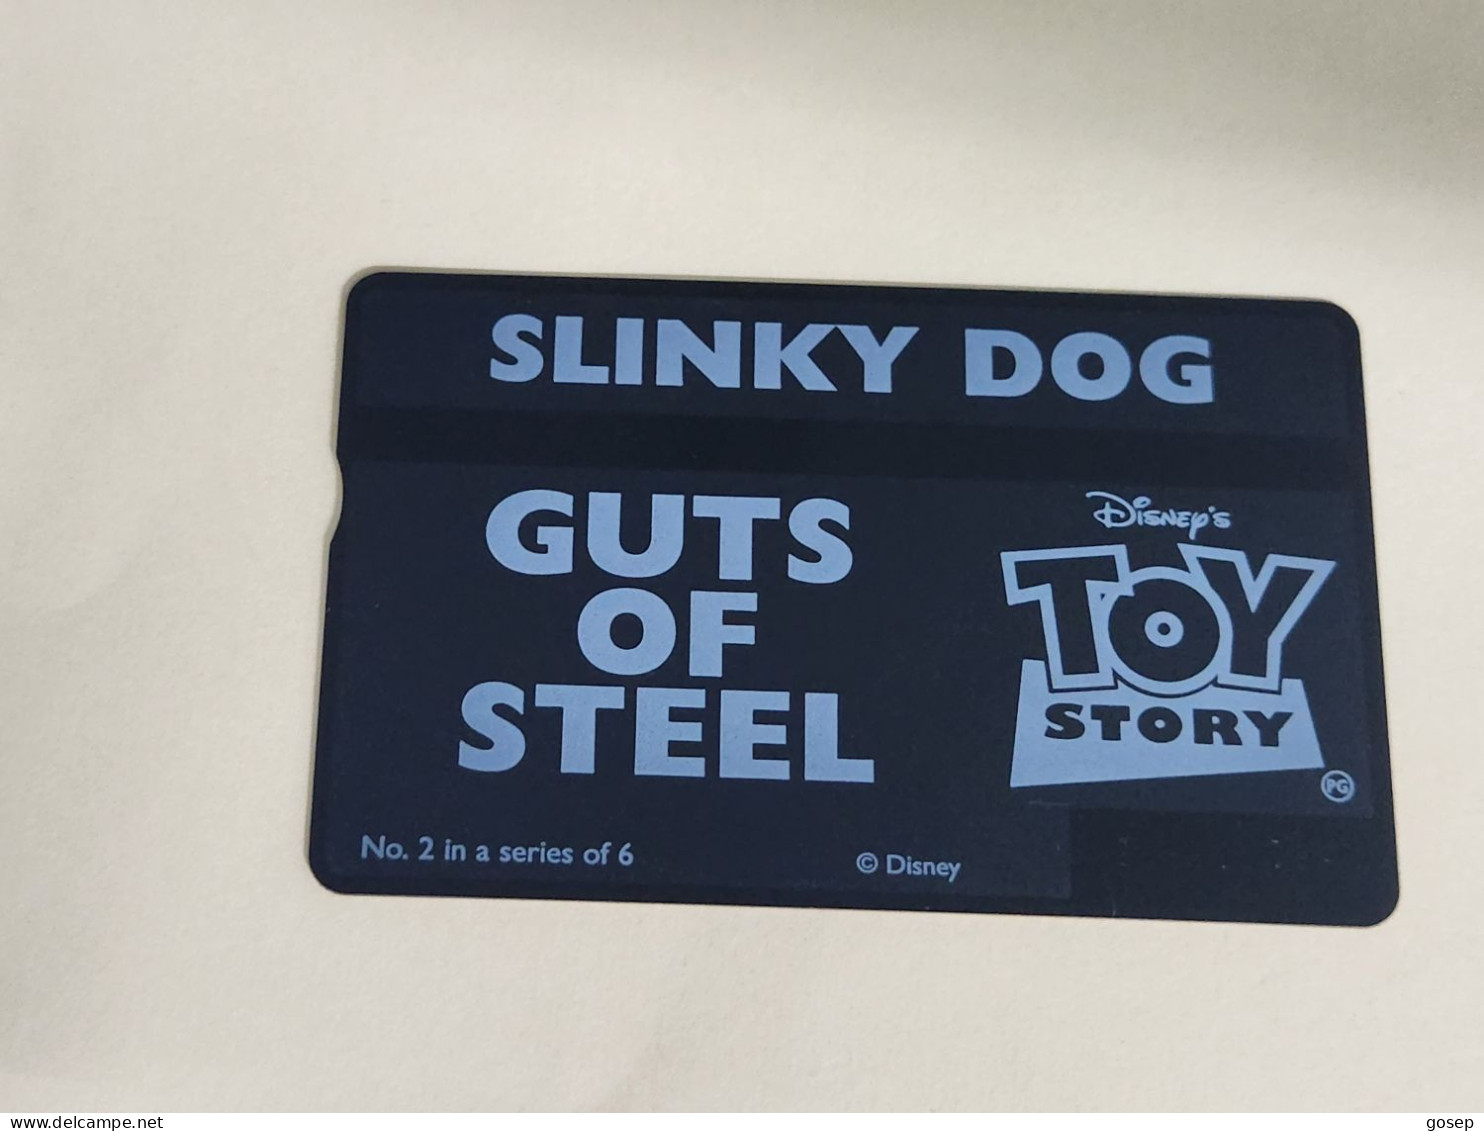 United Kingdom-(BTA149)Disney's Toy-2 Slinky Dog-(250)(20units)(662A00806)price Cataloge 8.00£-mint+1card Prepiad Free - BT Advertising Issues